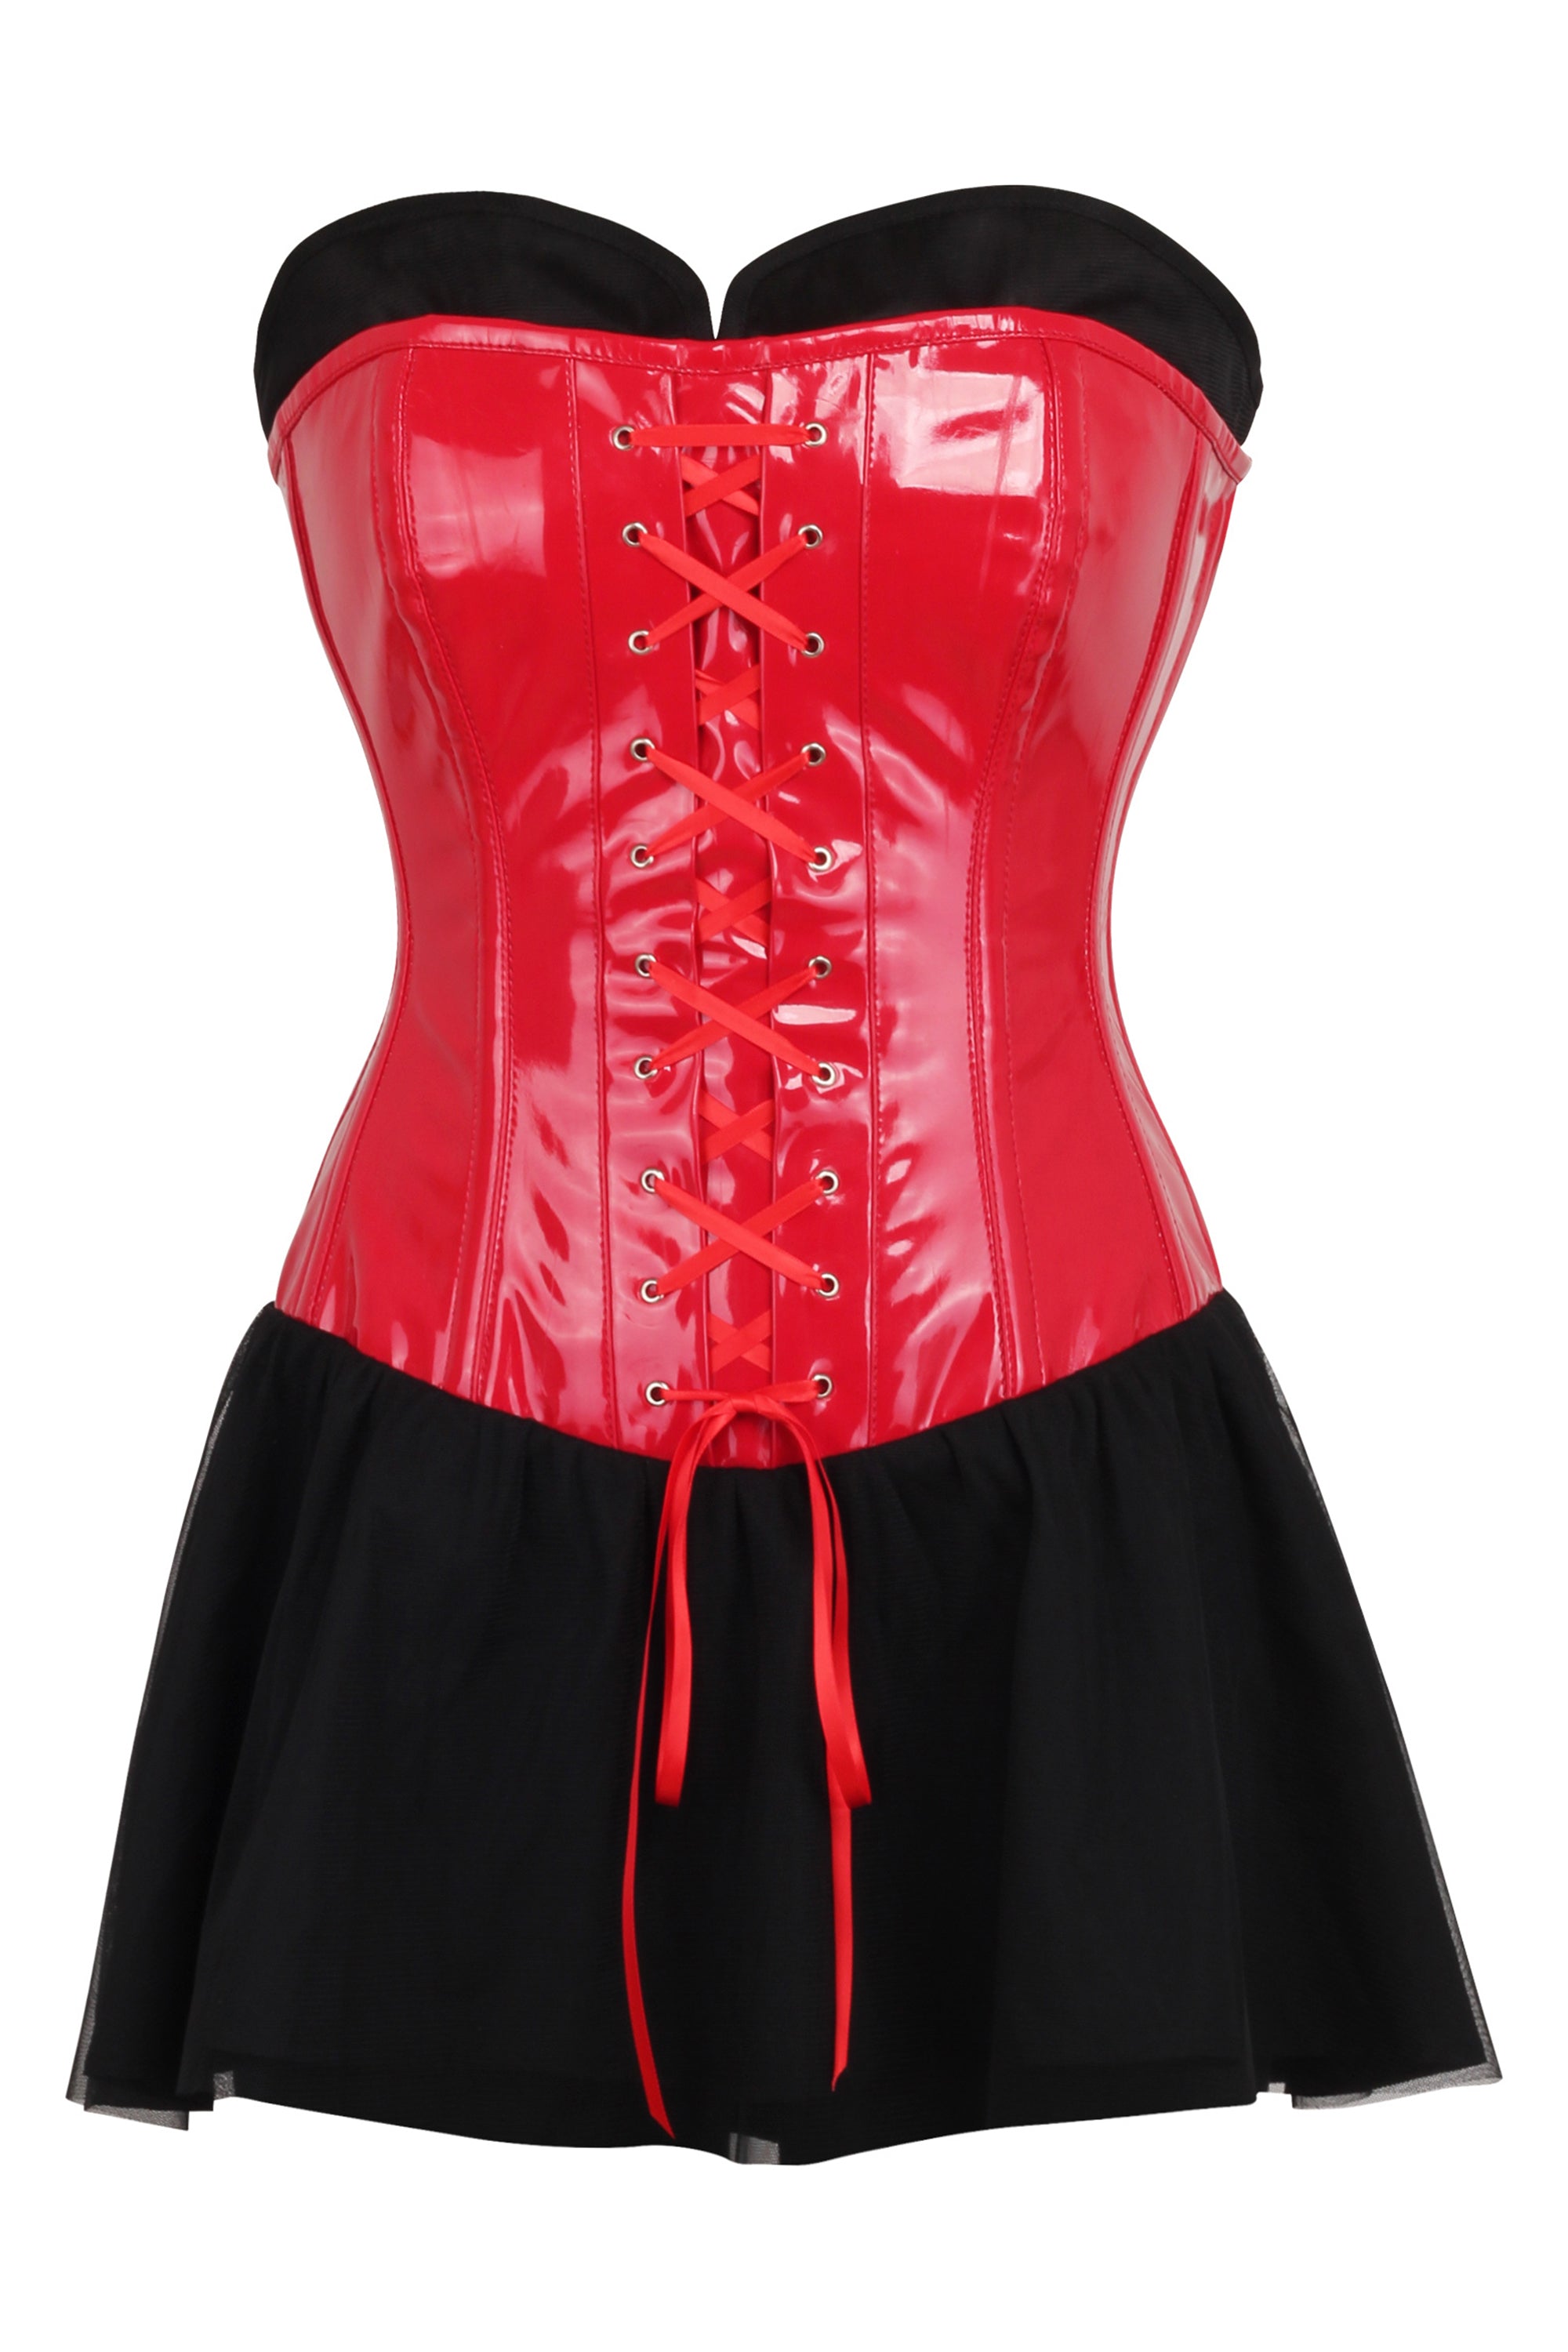 Short Red PVC Corset Dress with net fabric skirt